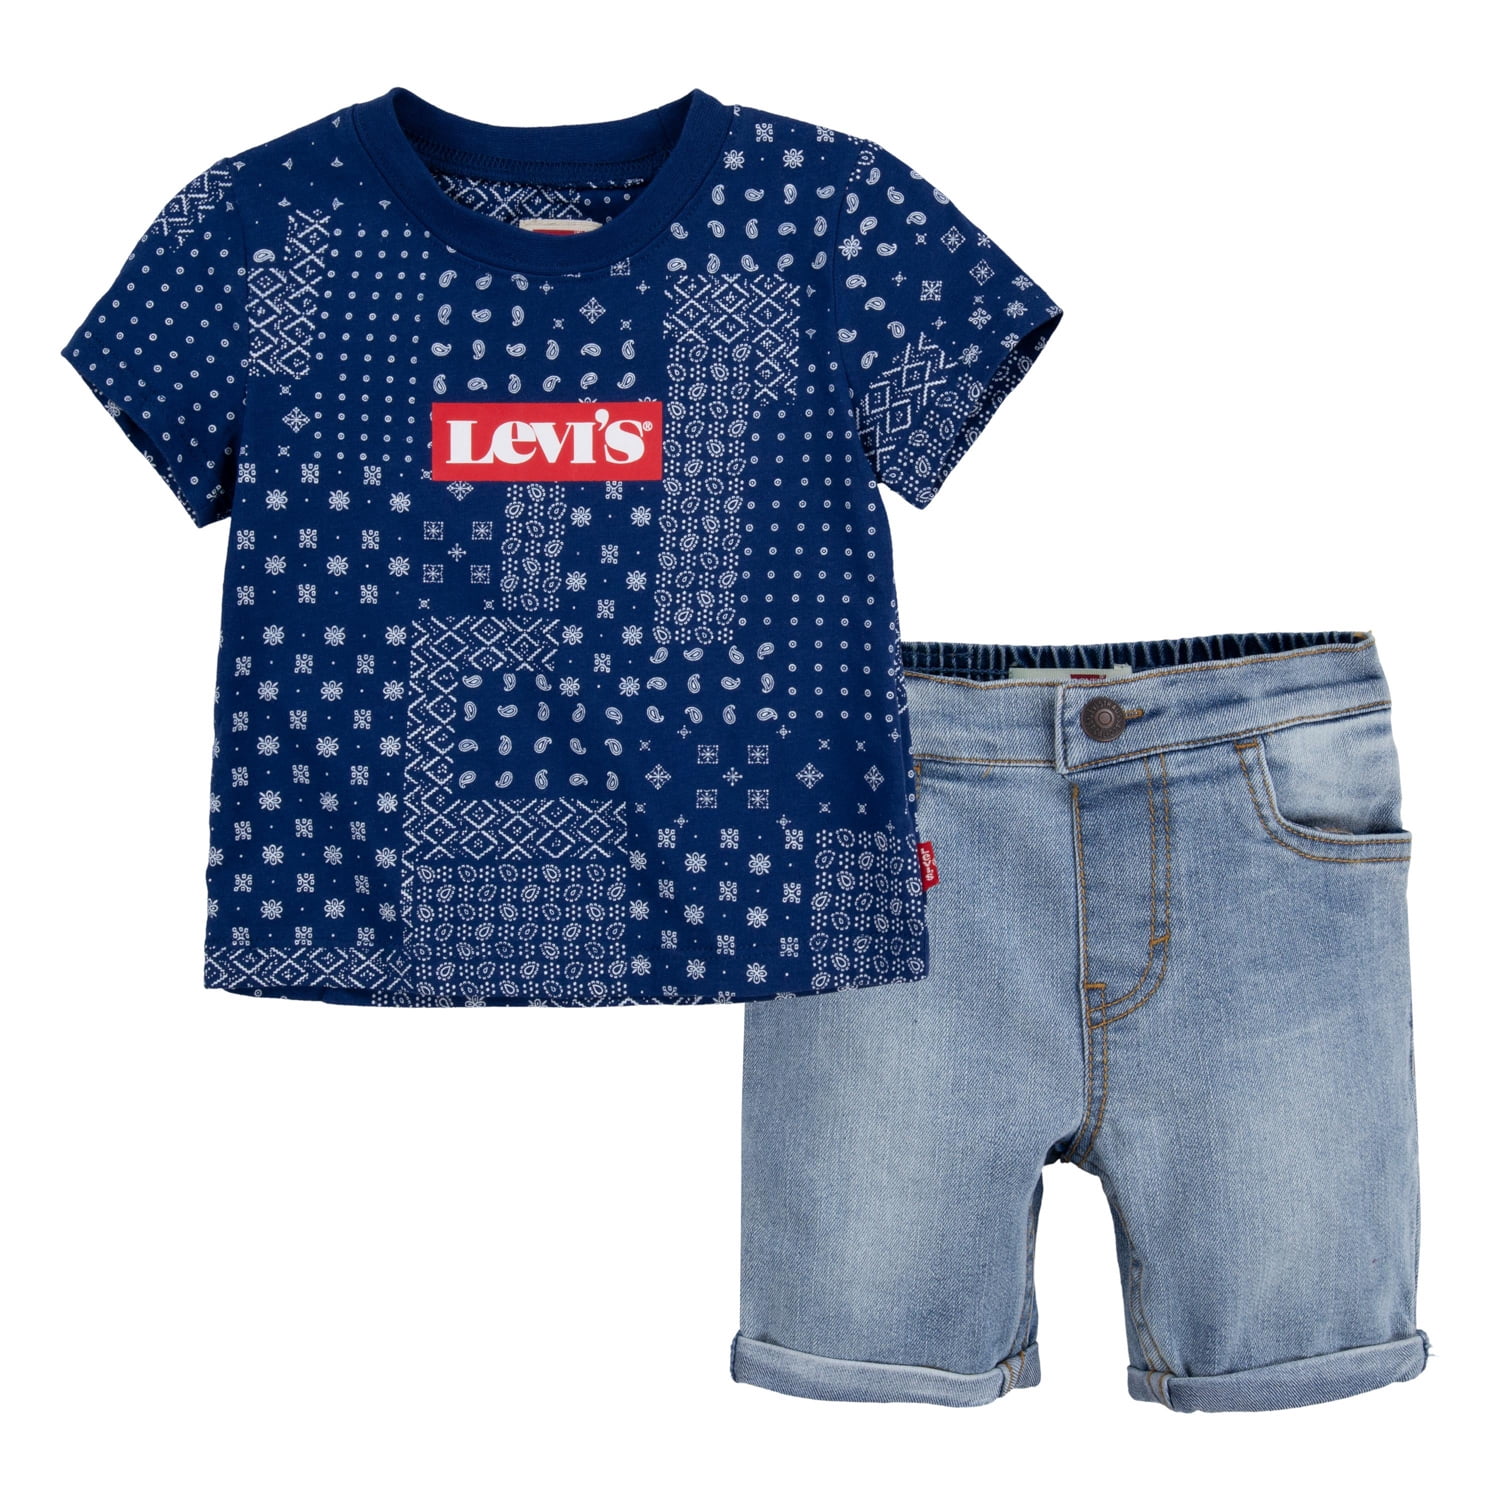 Toddler Boys Graphic Tee Shirt+Jean Shorts Clothes Set 